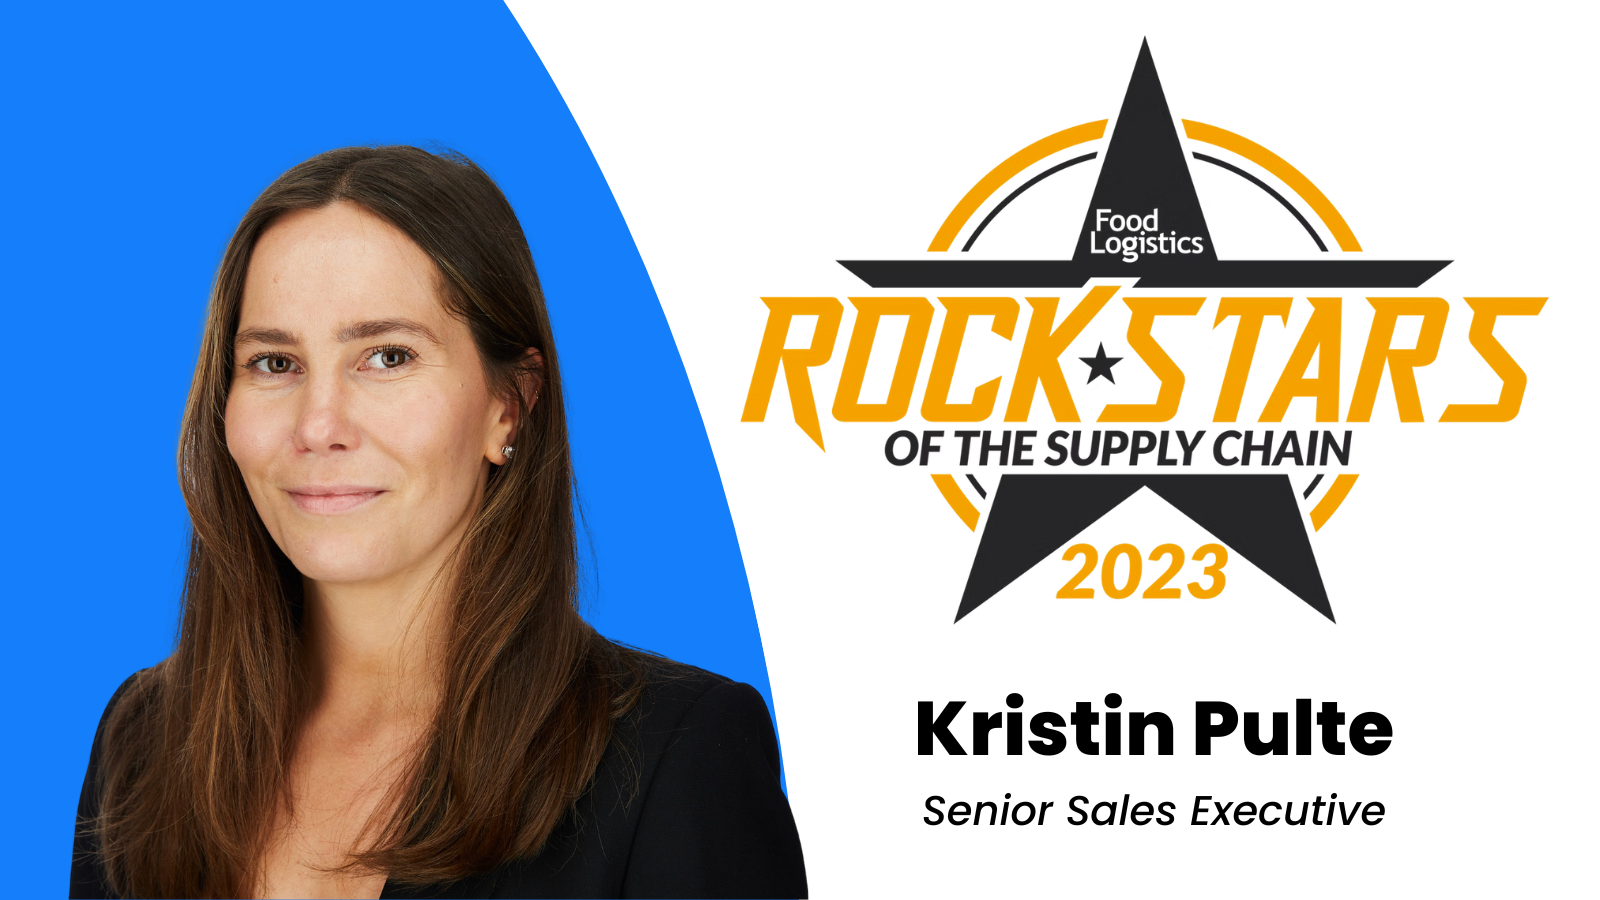 Employee Spotlight: Kristin Pulte, Senior Sales Executive & Recipient of 2023 Rock Stars of the Supply Chain Award